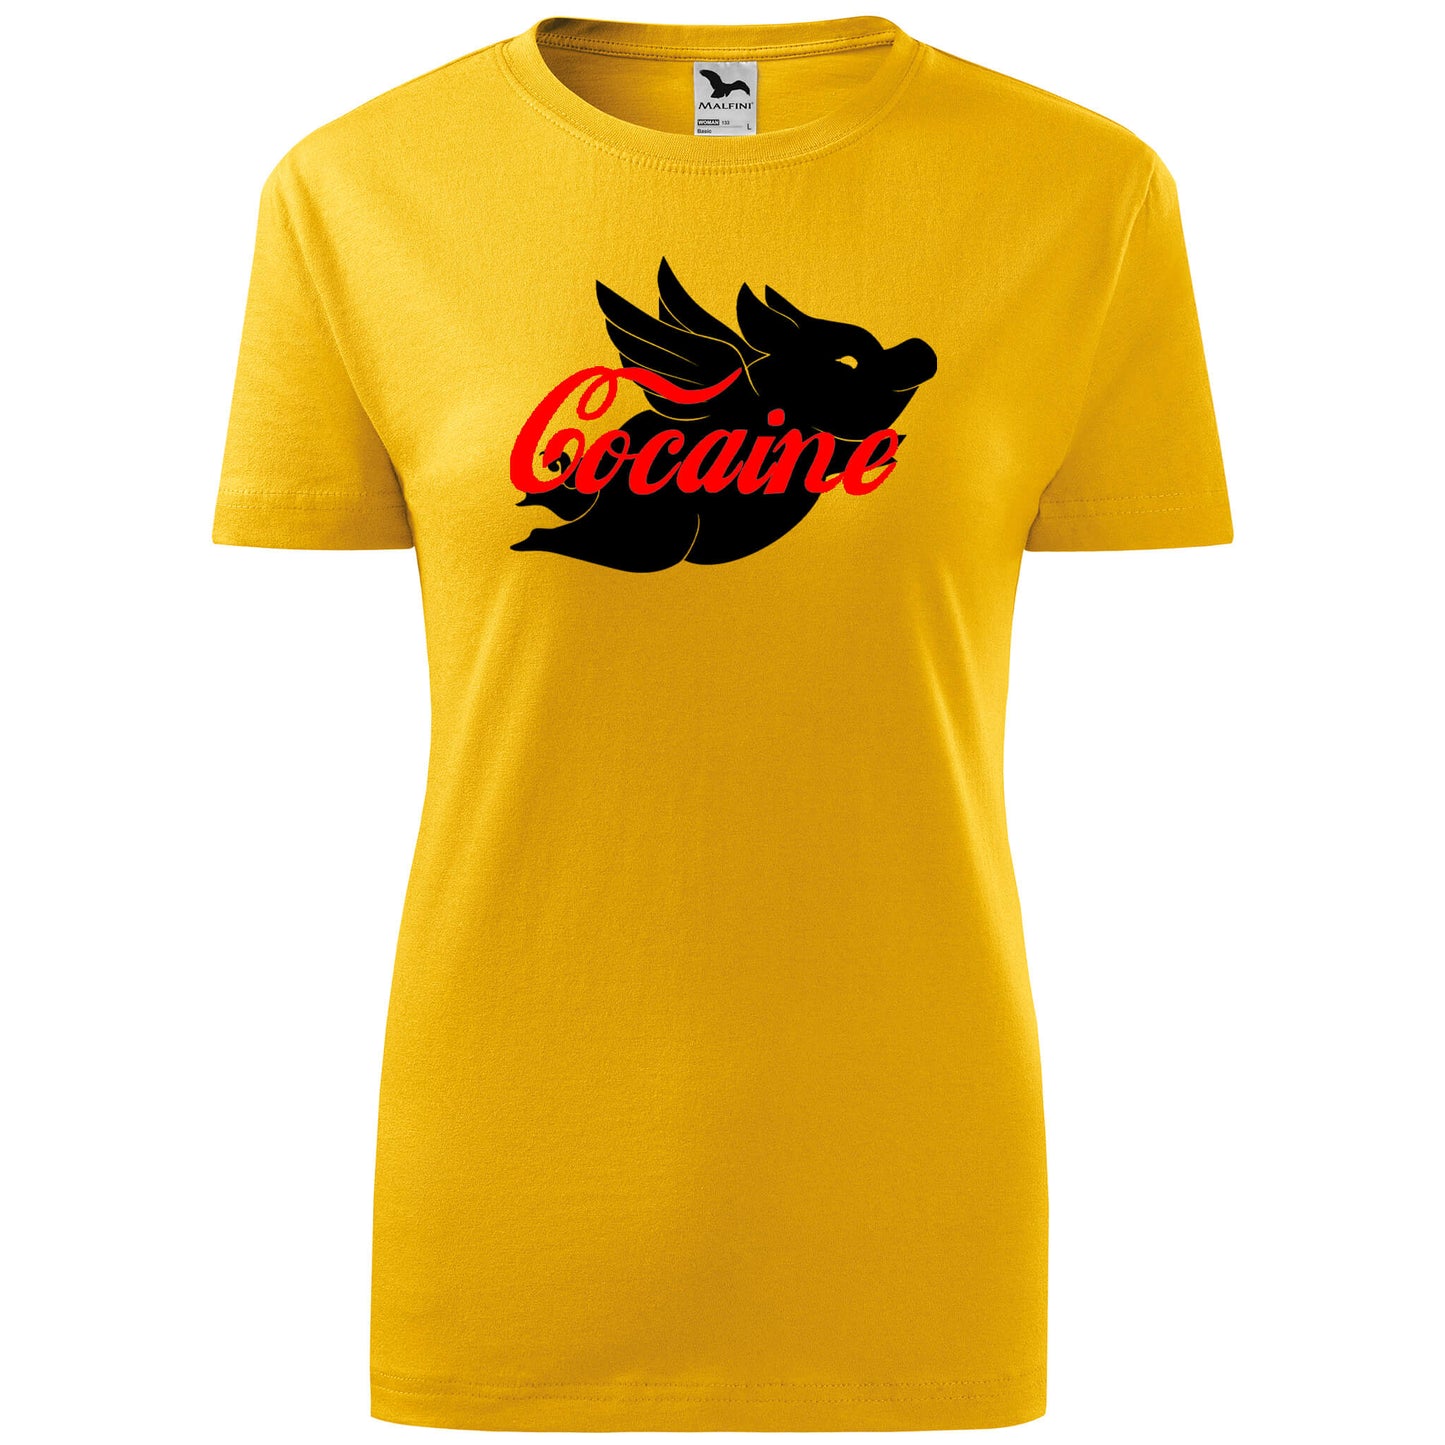 T-shirt - Cocaine - rvdesignprint